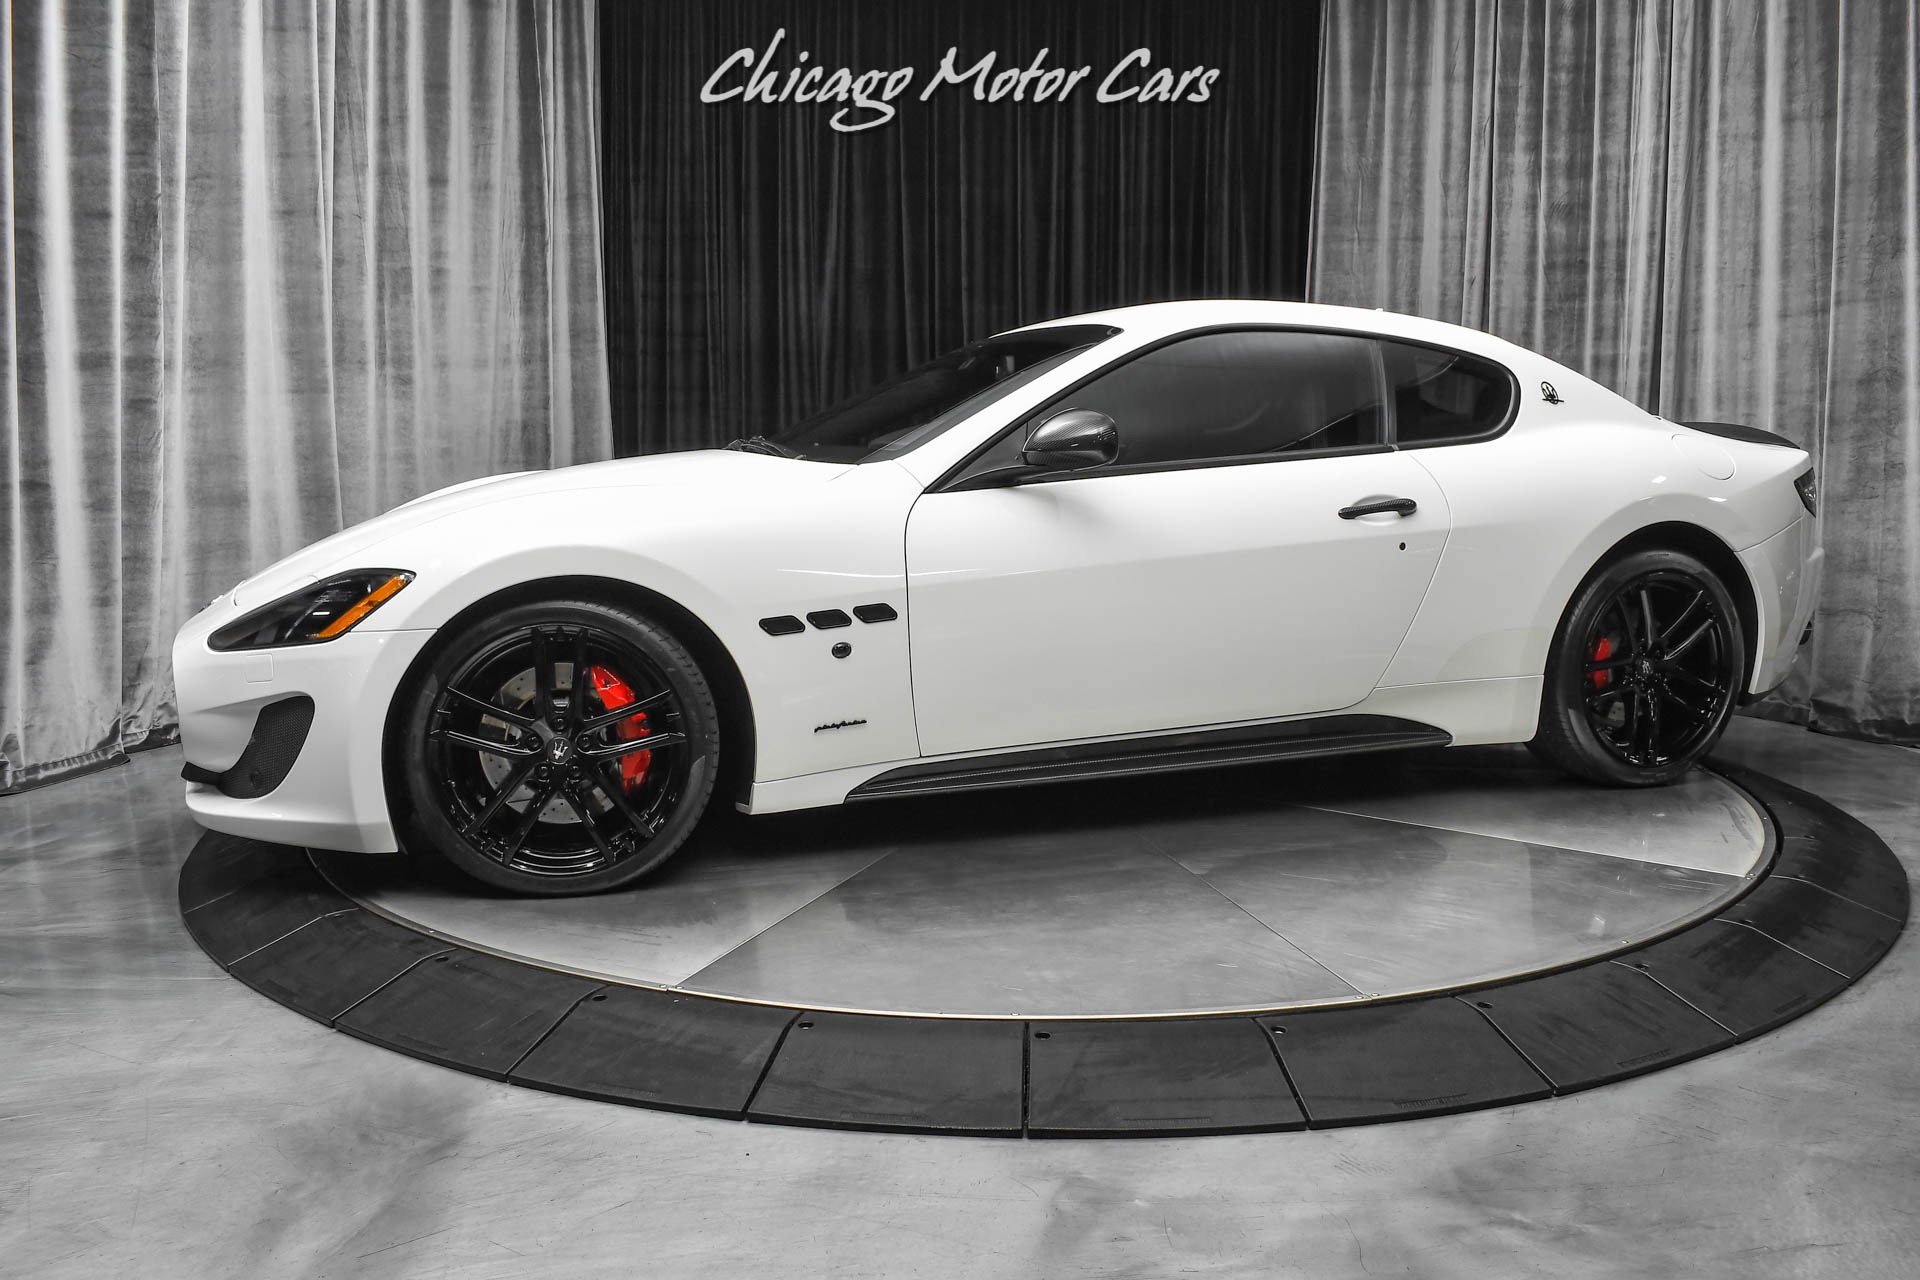 Used 2015 Maserati GranTurismo MC ONLY 12,581 MILES! FULL CARBON FIBER PKG!  For Sale (Special Pricing) | Chicago Motor Cars Stock #F0127522 CM